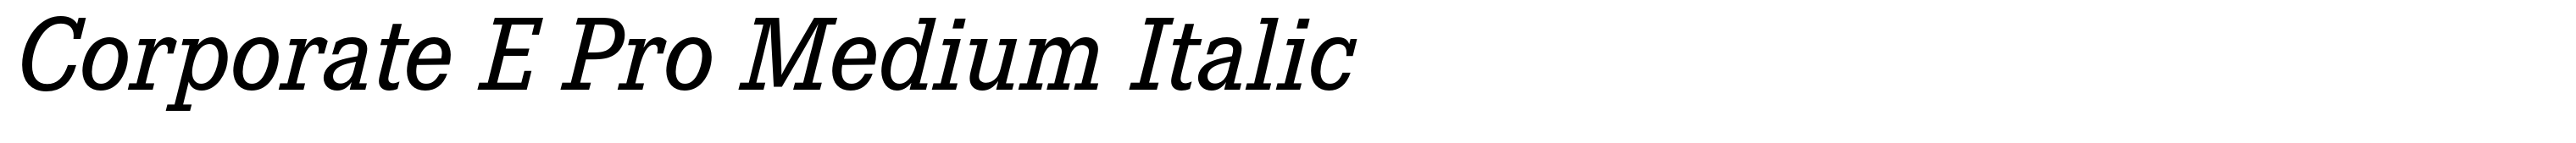 Corporate E Pro Medium Italic